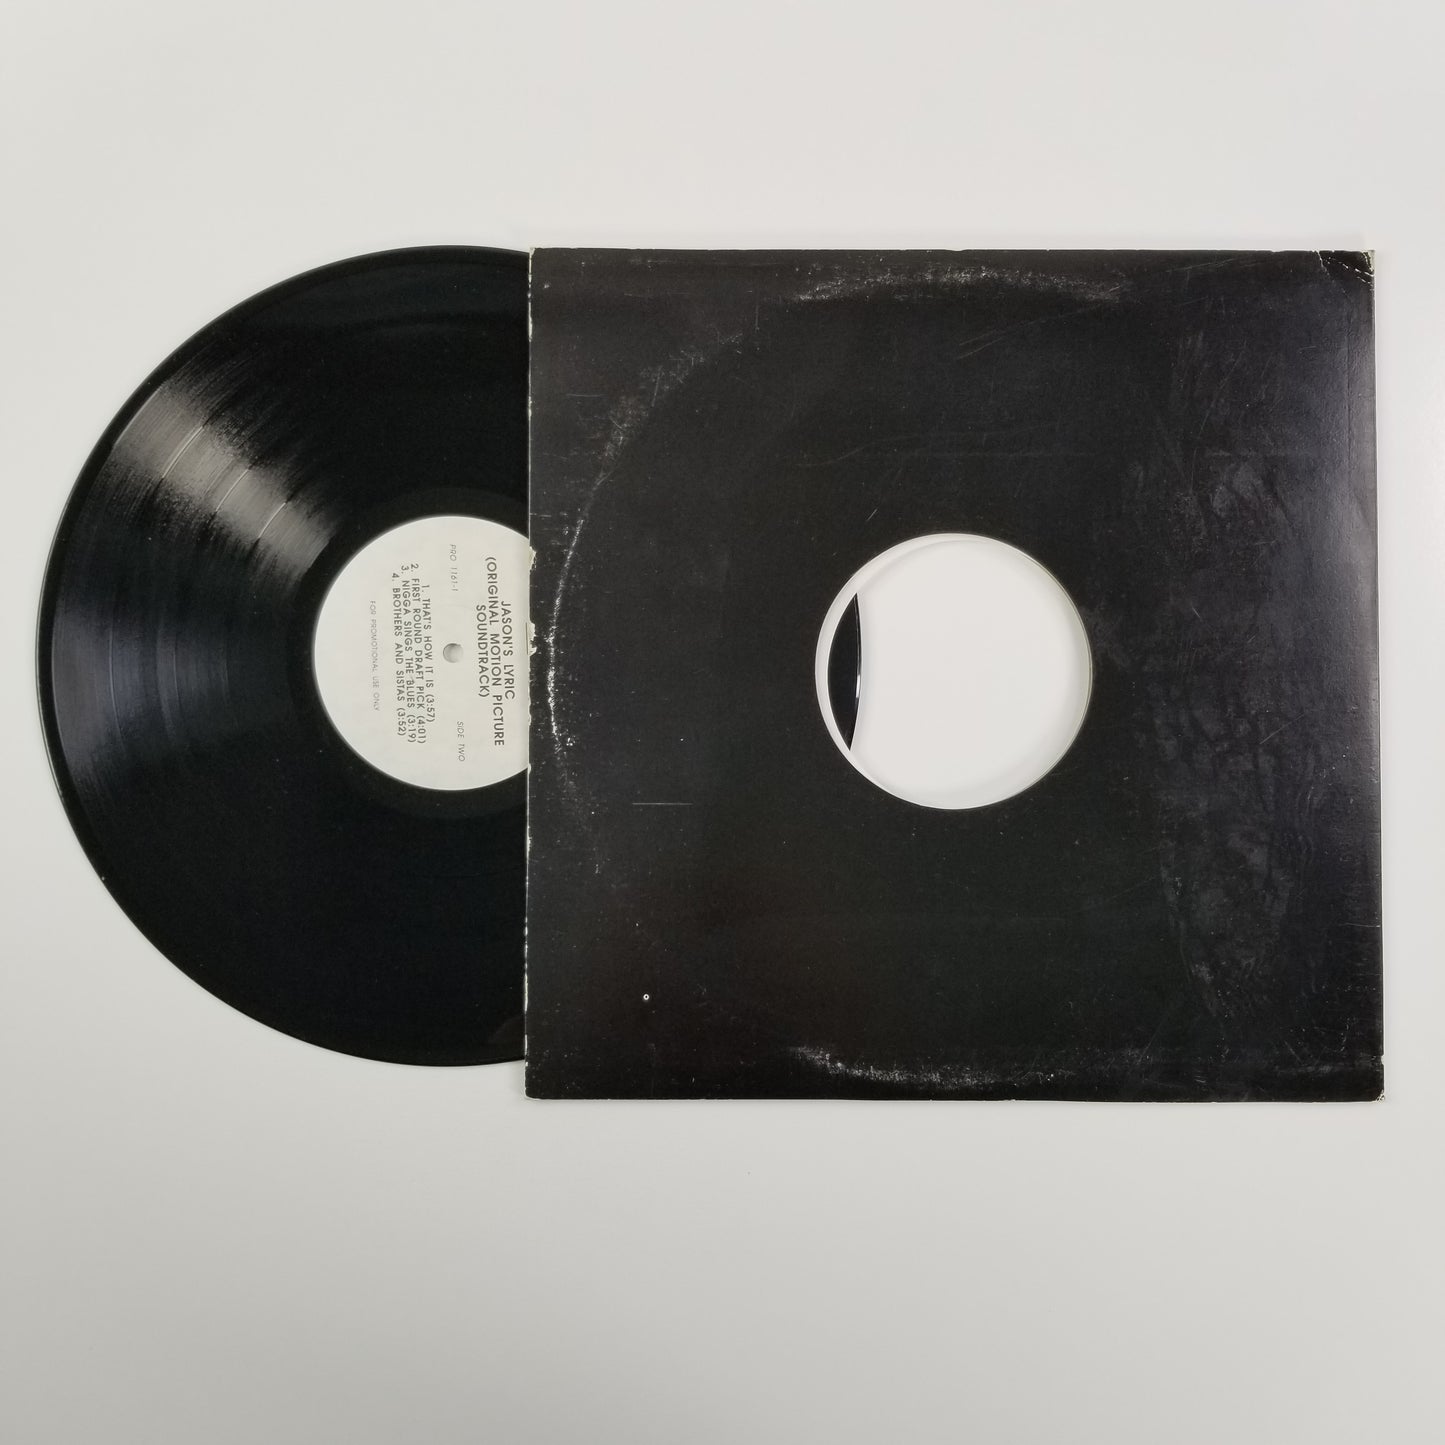 Jason's Lyric Limited Edition Vinyl for DJ's (1994, LP Promo Sampler)